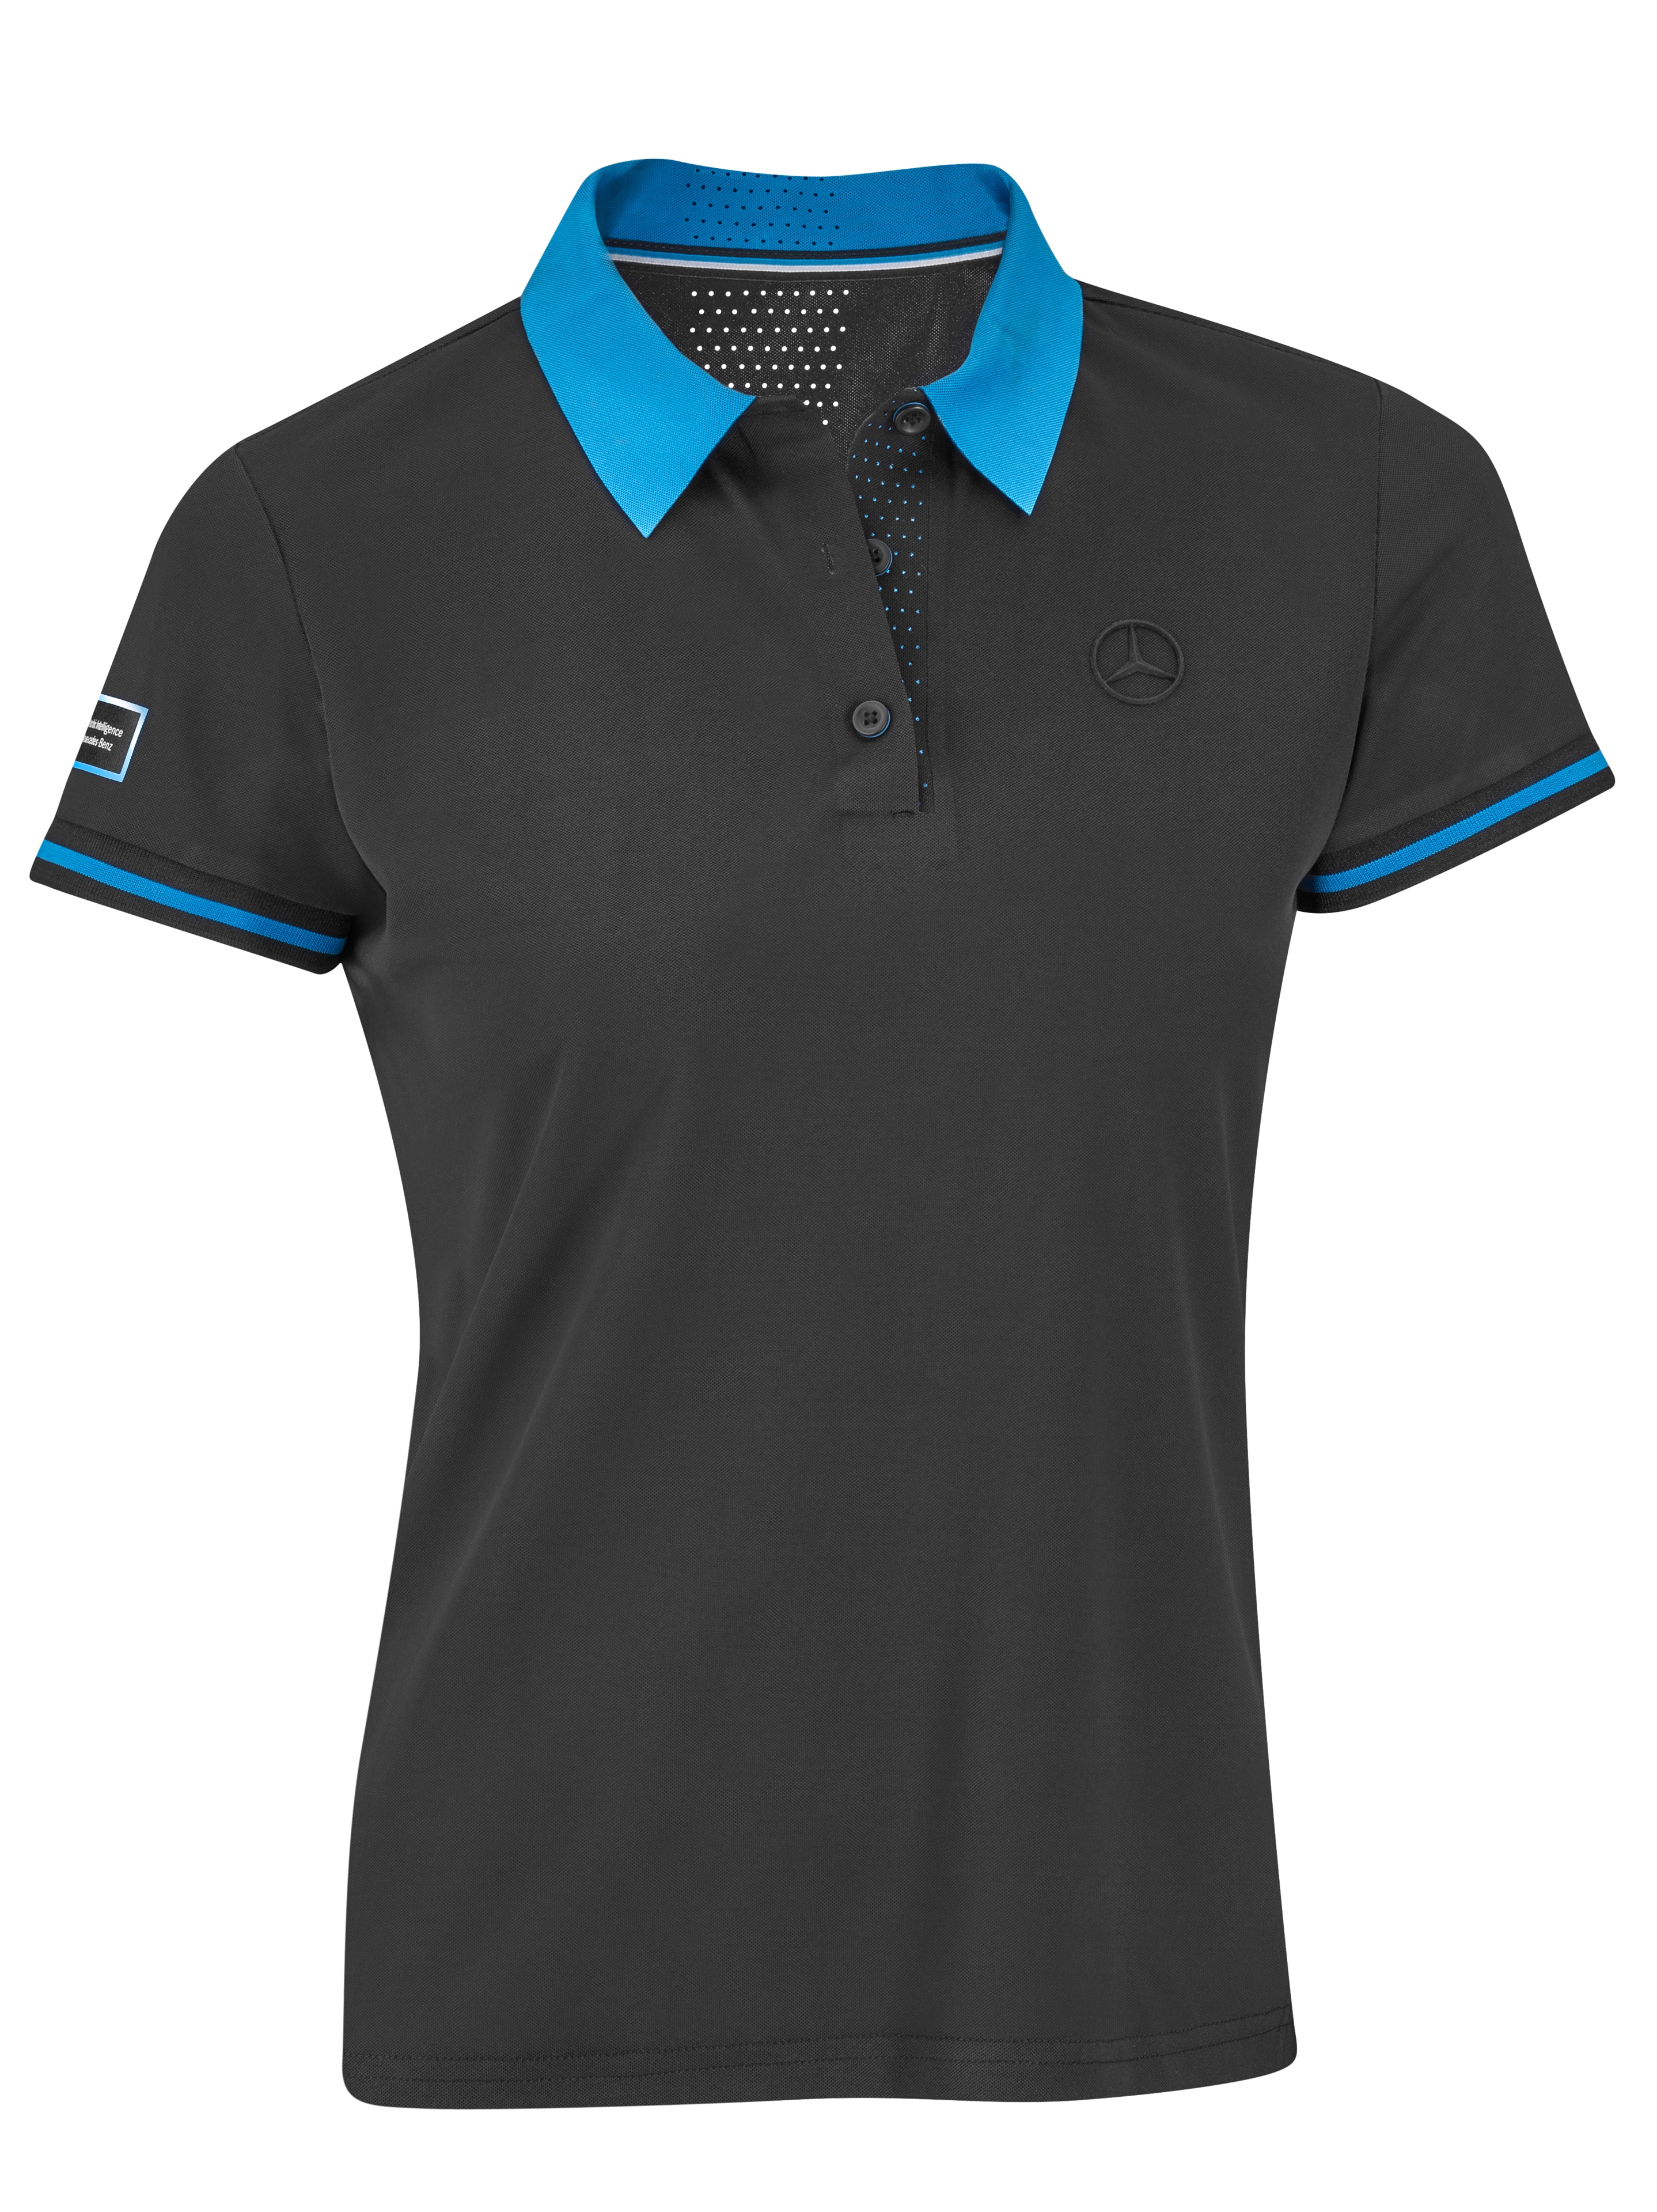 Poloshirt Damen - schwarz / blau, XL